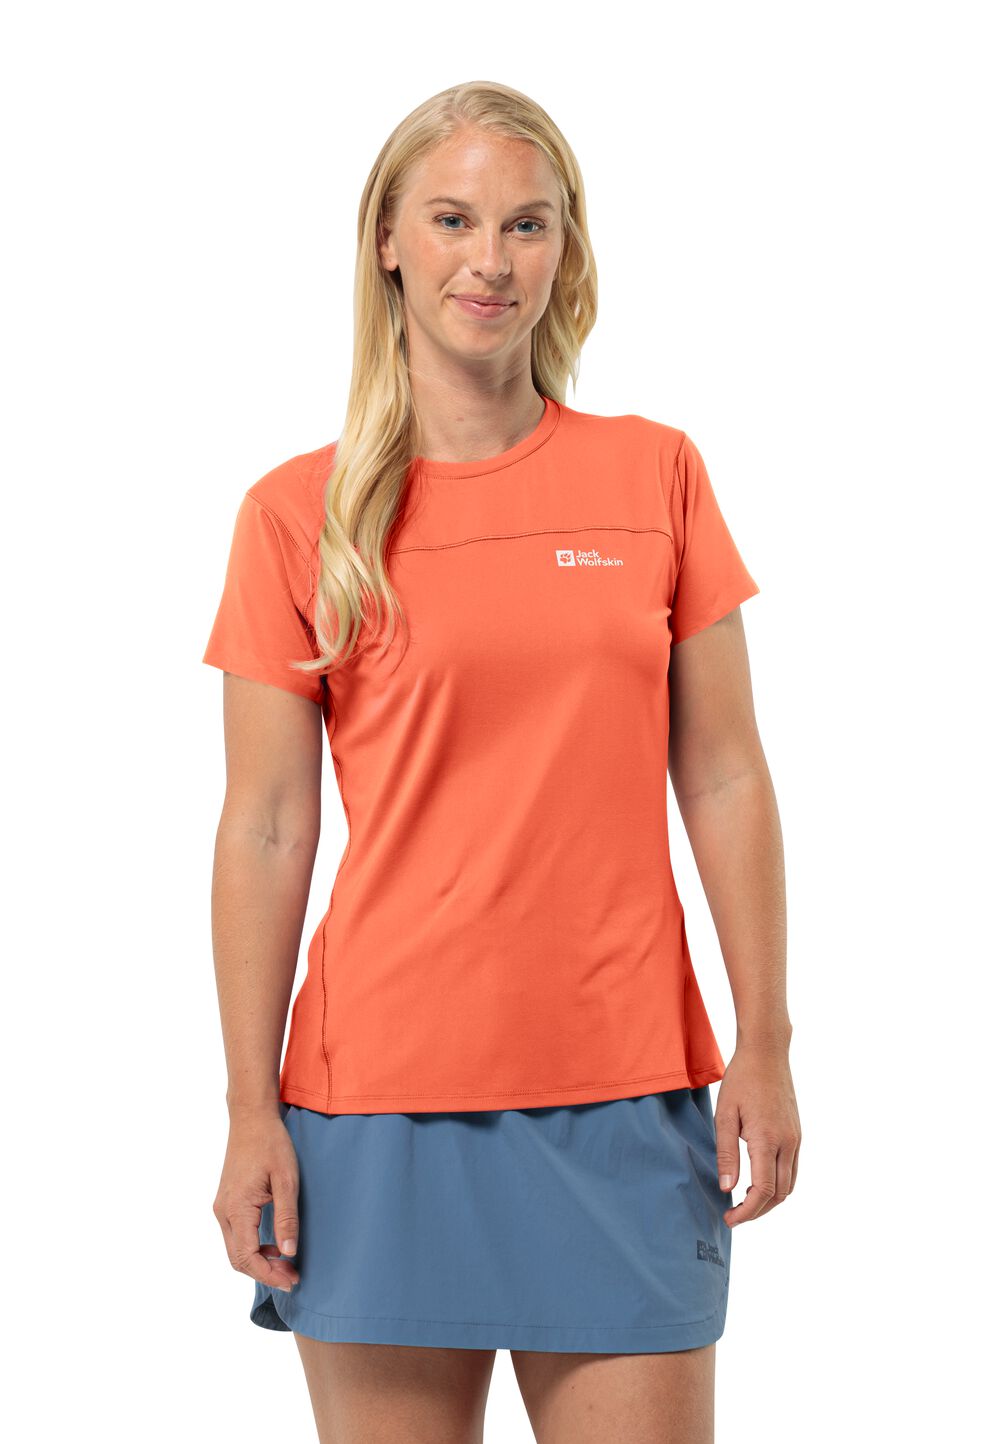 Jack Wolfskin Prelight Chill T-Shirt Women Functioneel shirt Dames M rood digital orange